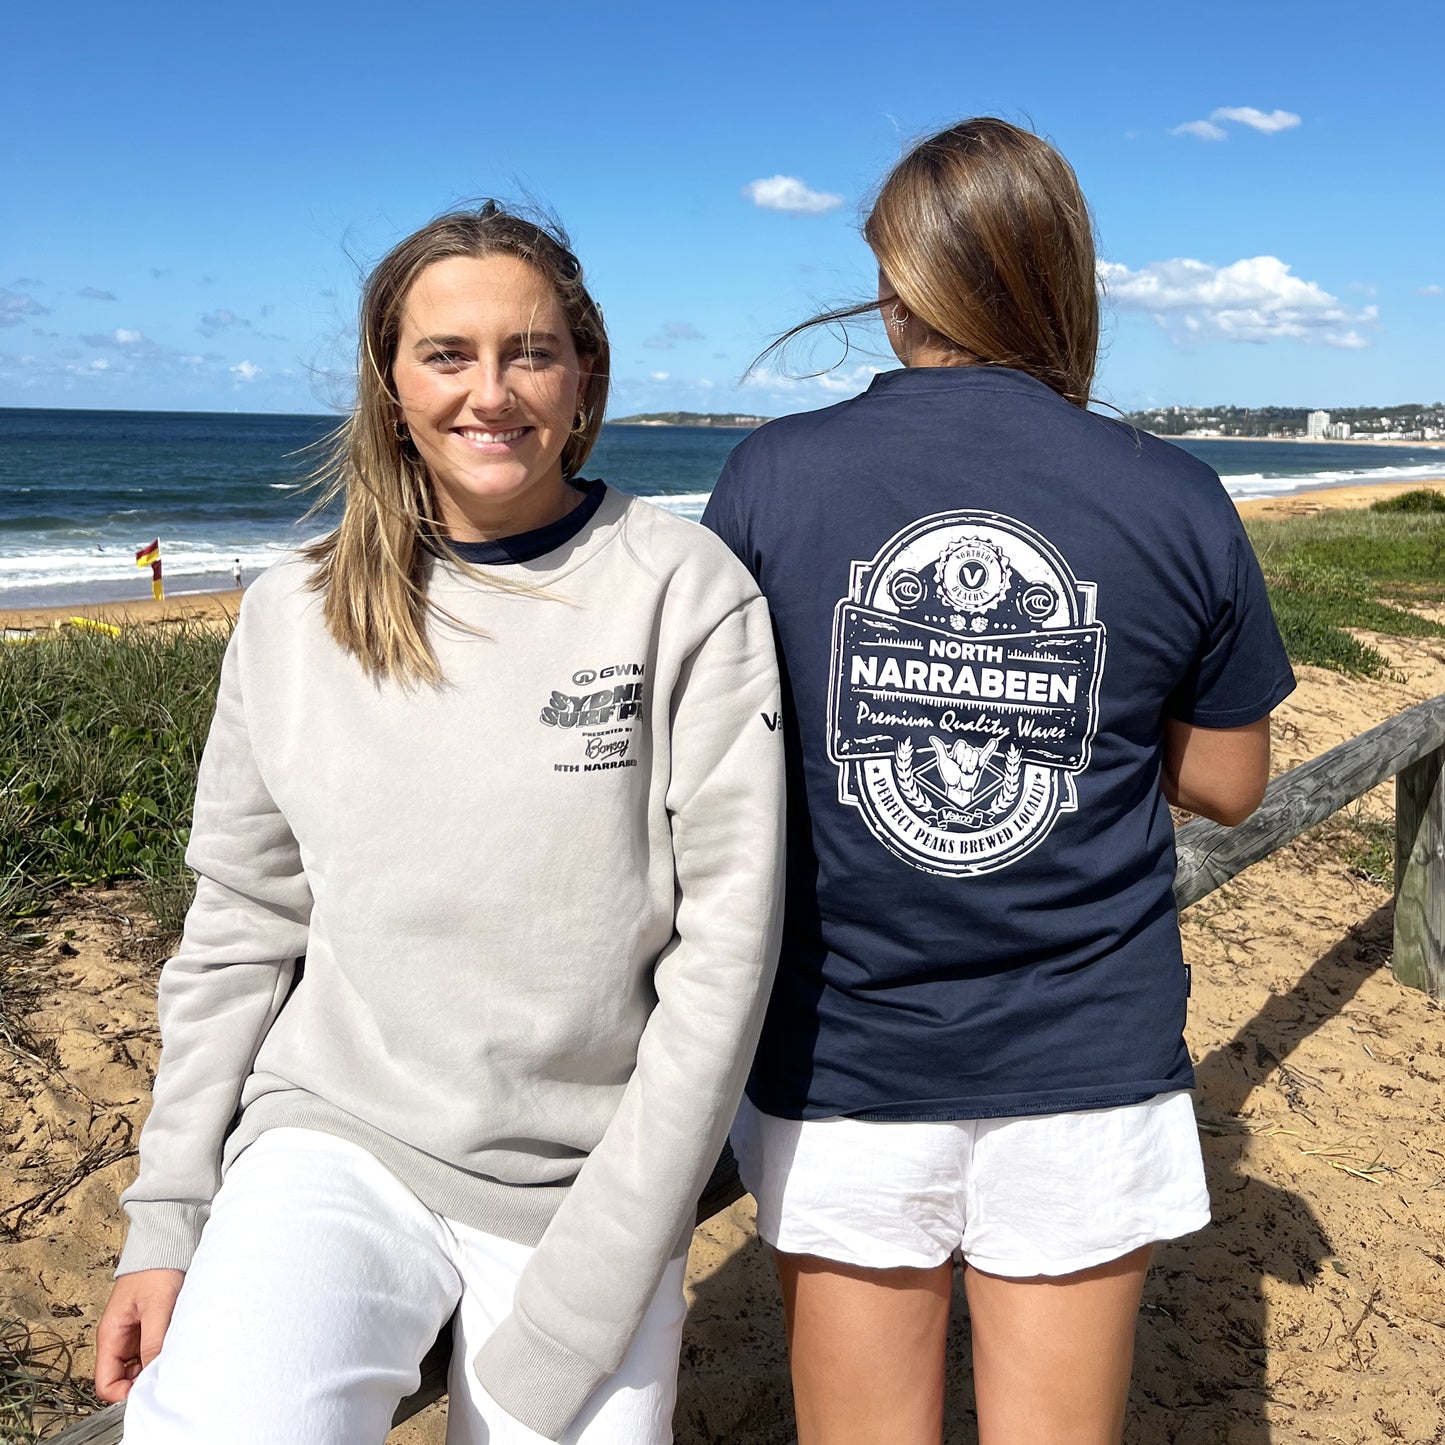 Sydney Surf Pro Crew Neck Sweater